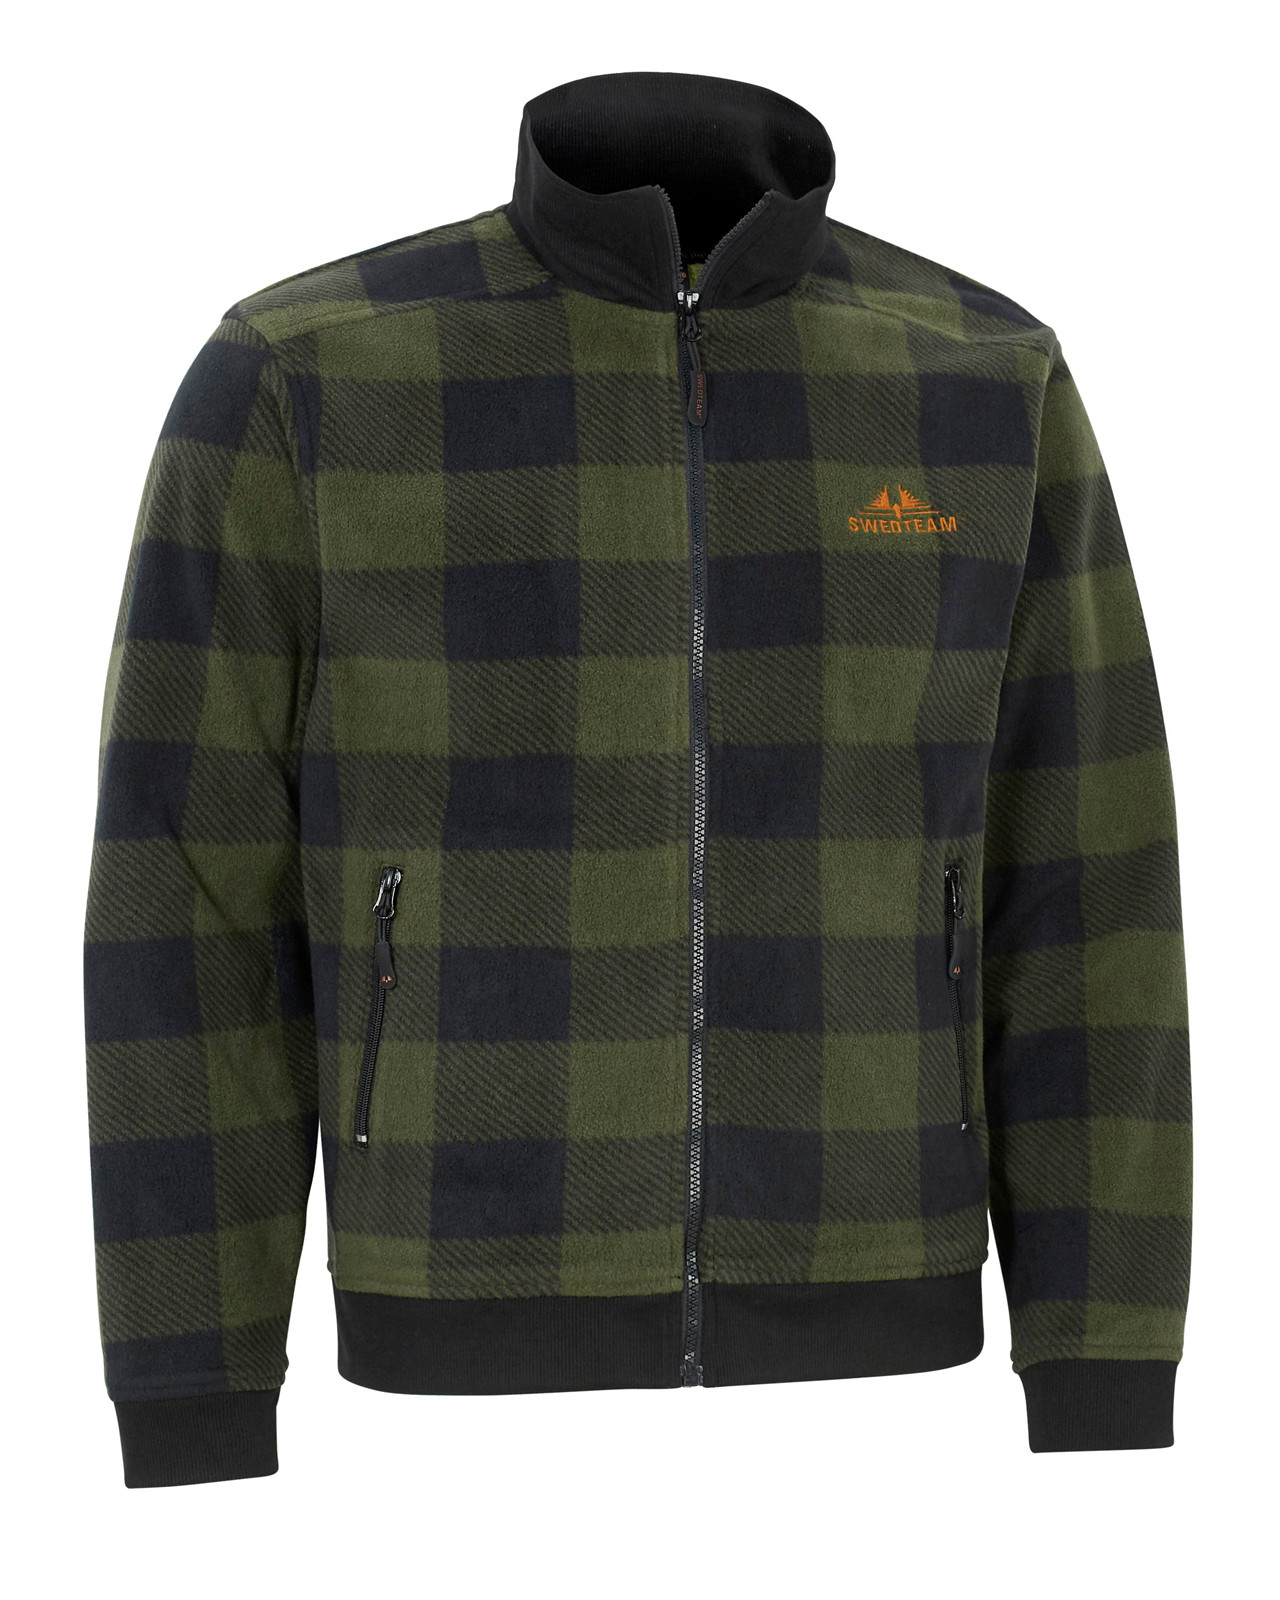 Se Swedteam Lynx sweater fullzip (Green, 4XL) hos Specialbutikken